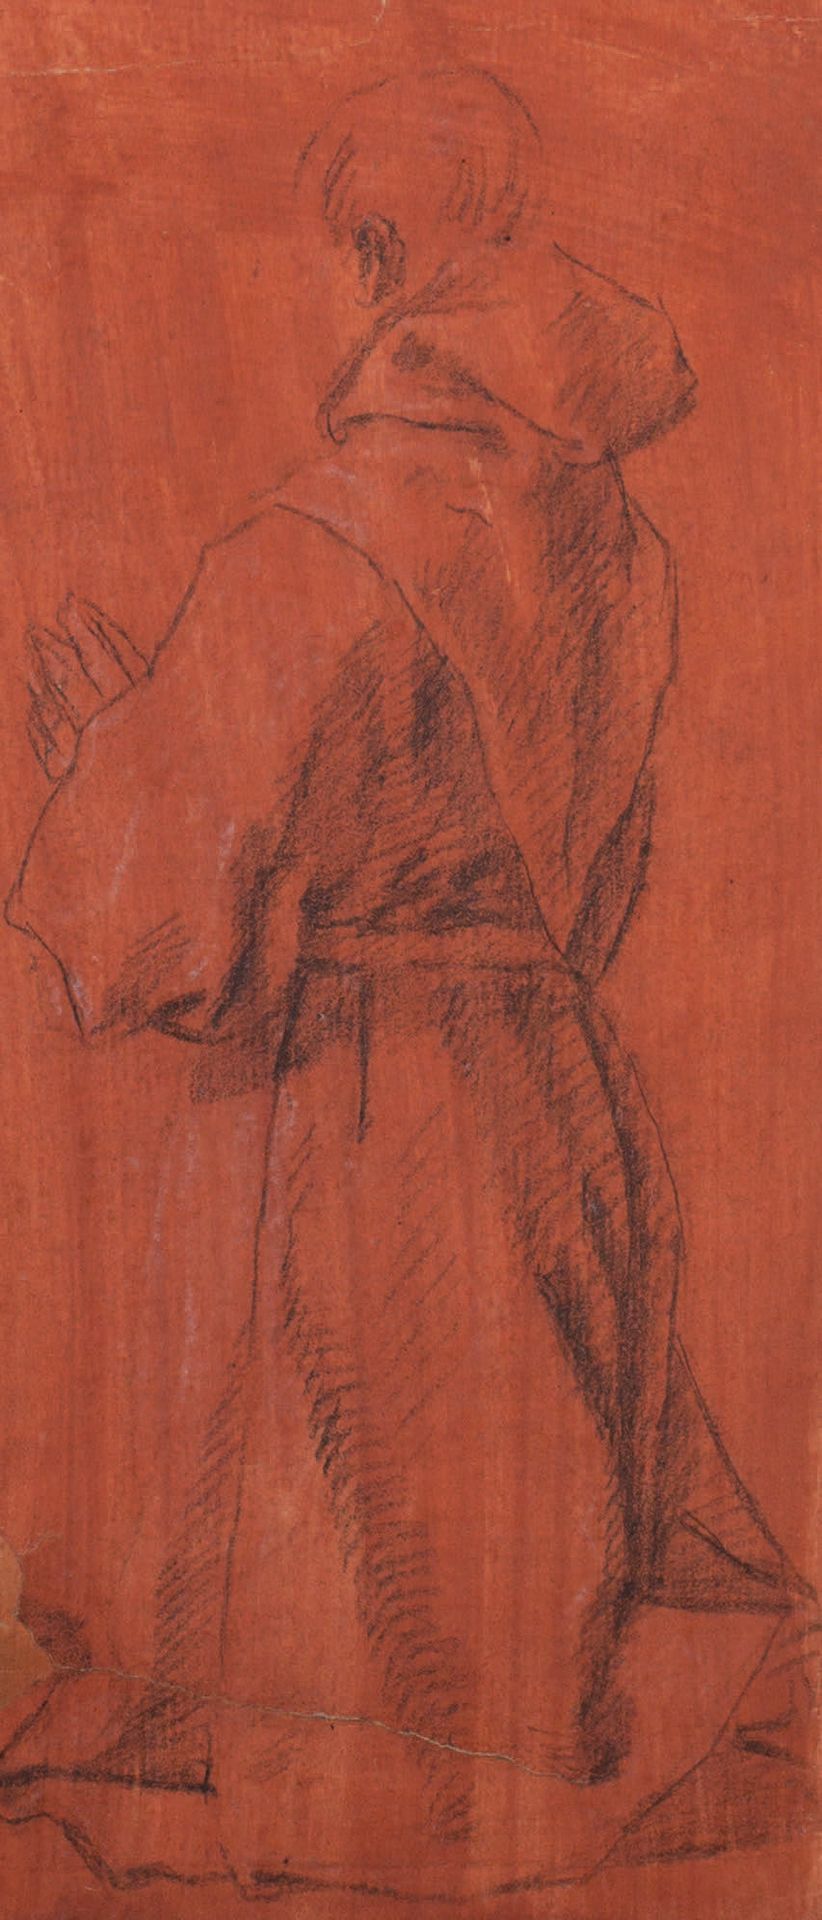 Lazzaro Tavarone (1556-1641) 
Monk kneeling in prayer, seen from behind
Black st&hellip;